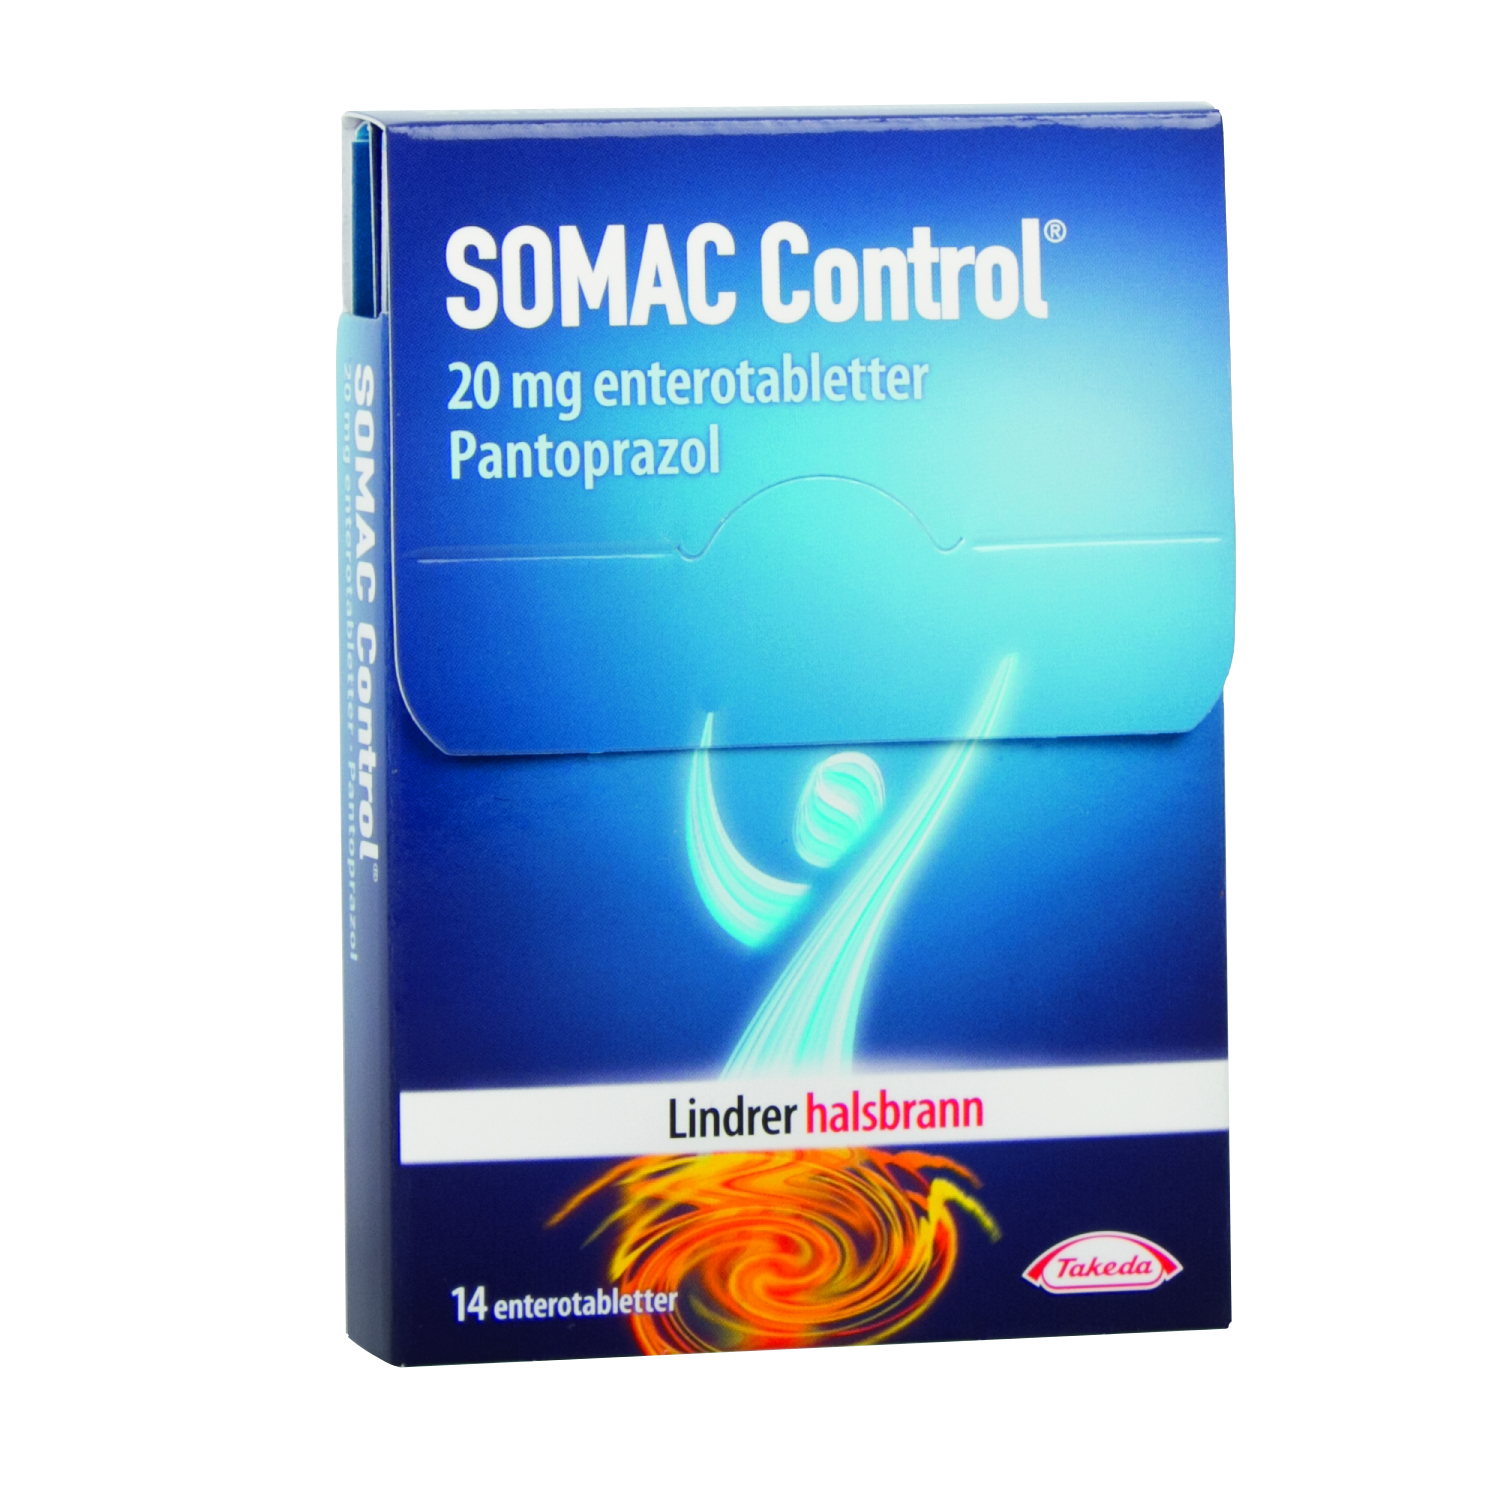 Somac Control Enterotabletter 20mg, 14 stk.